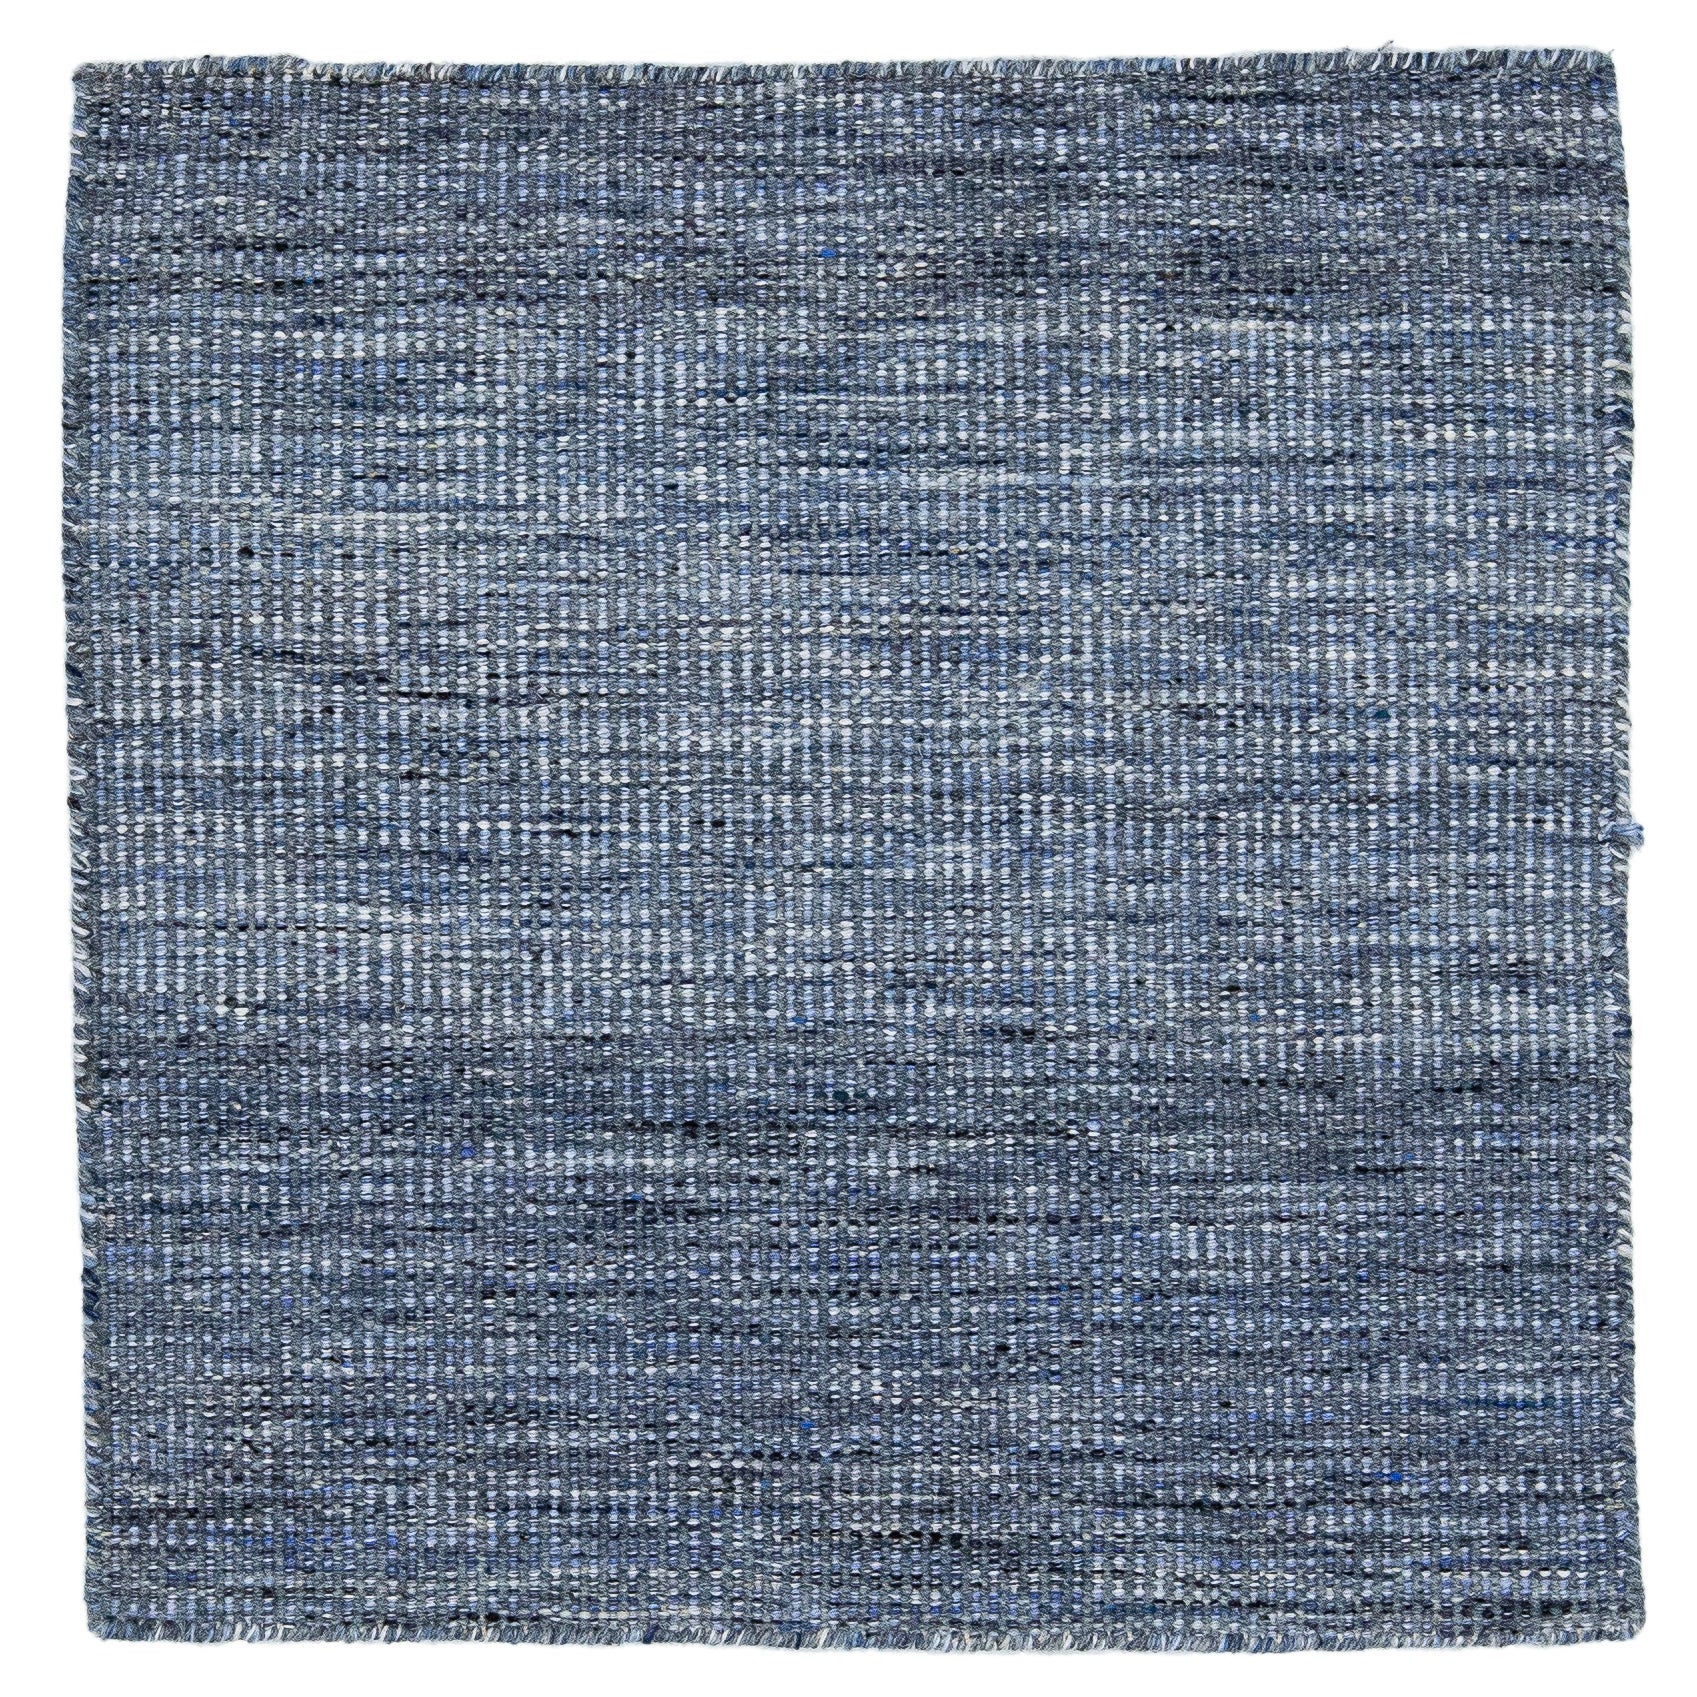 Tapis Kilim Apadana en laine bleu marine à tissage plat sur mesure